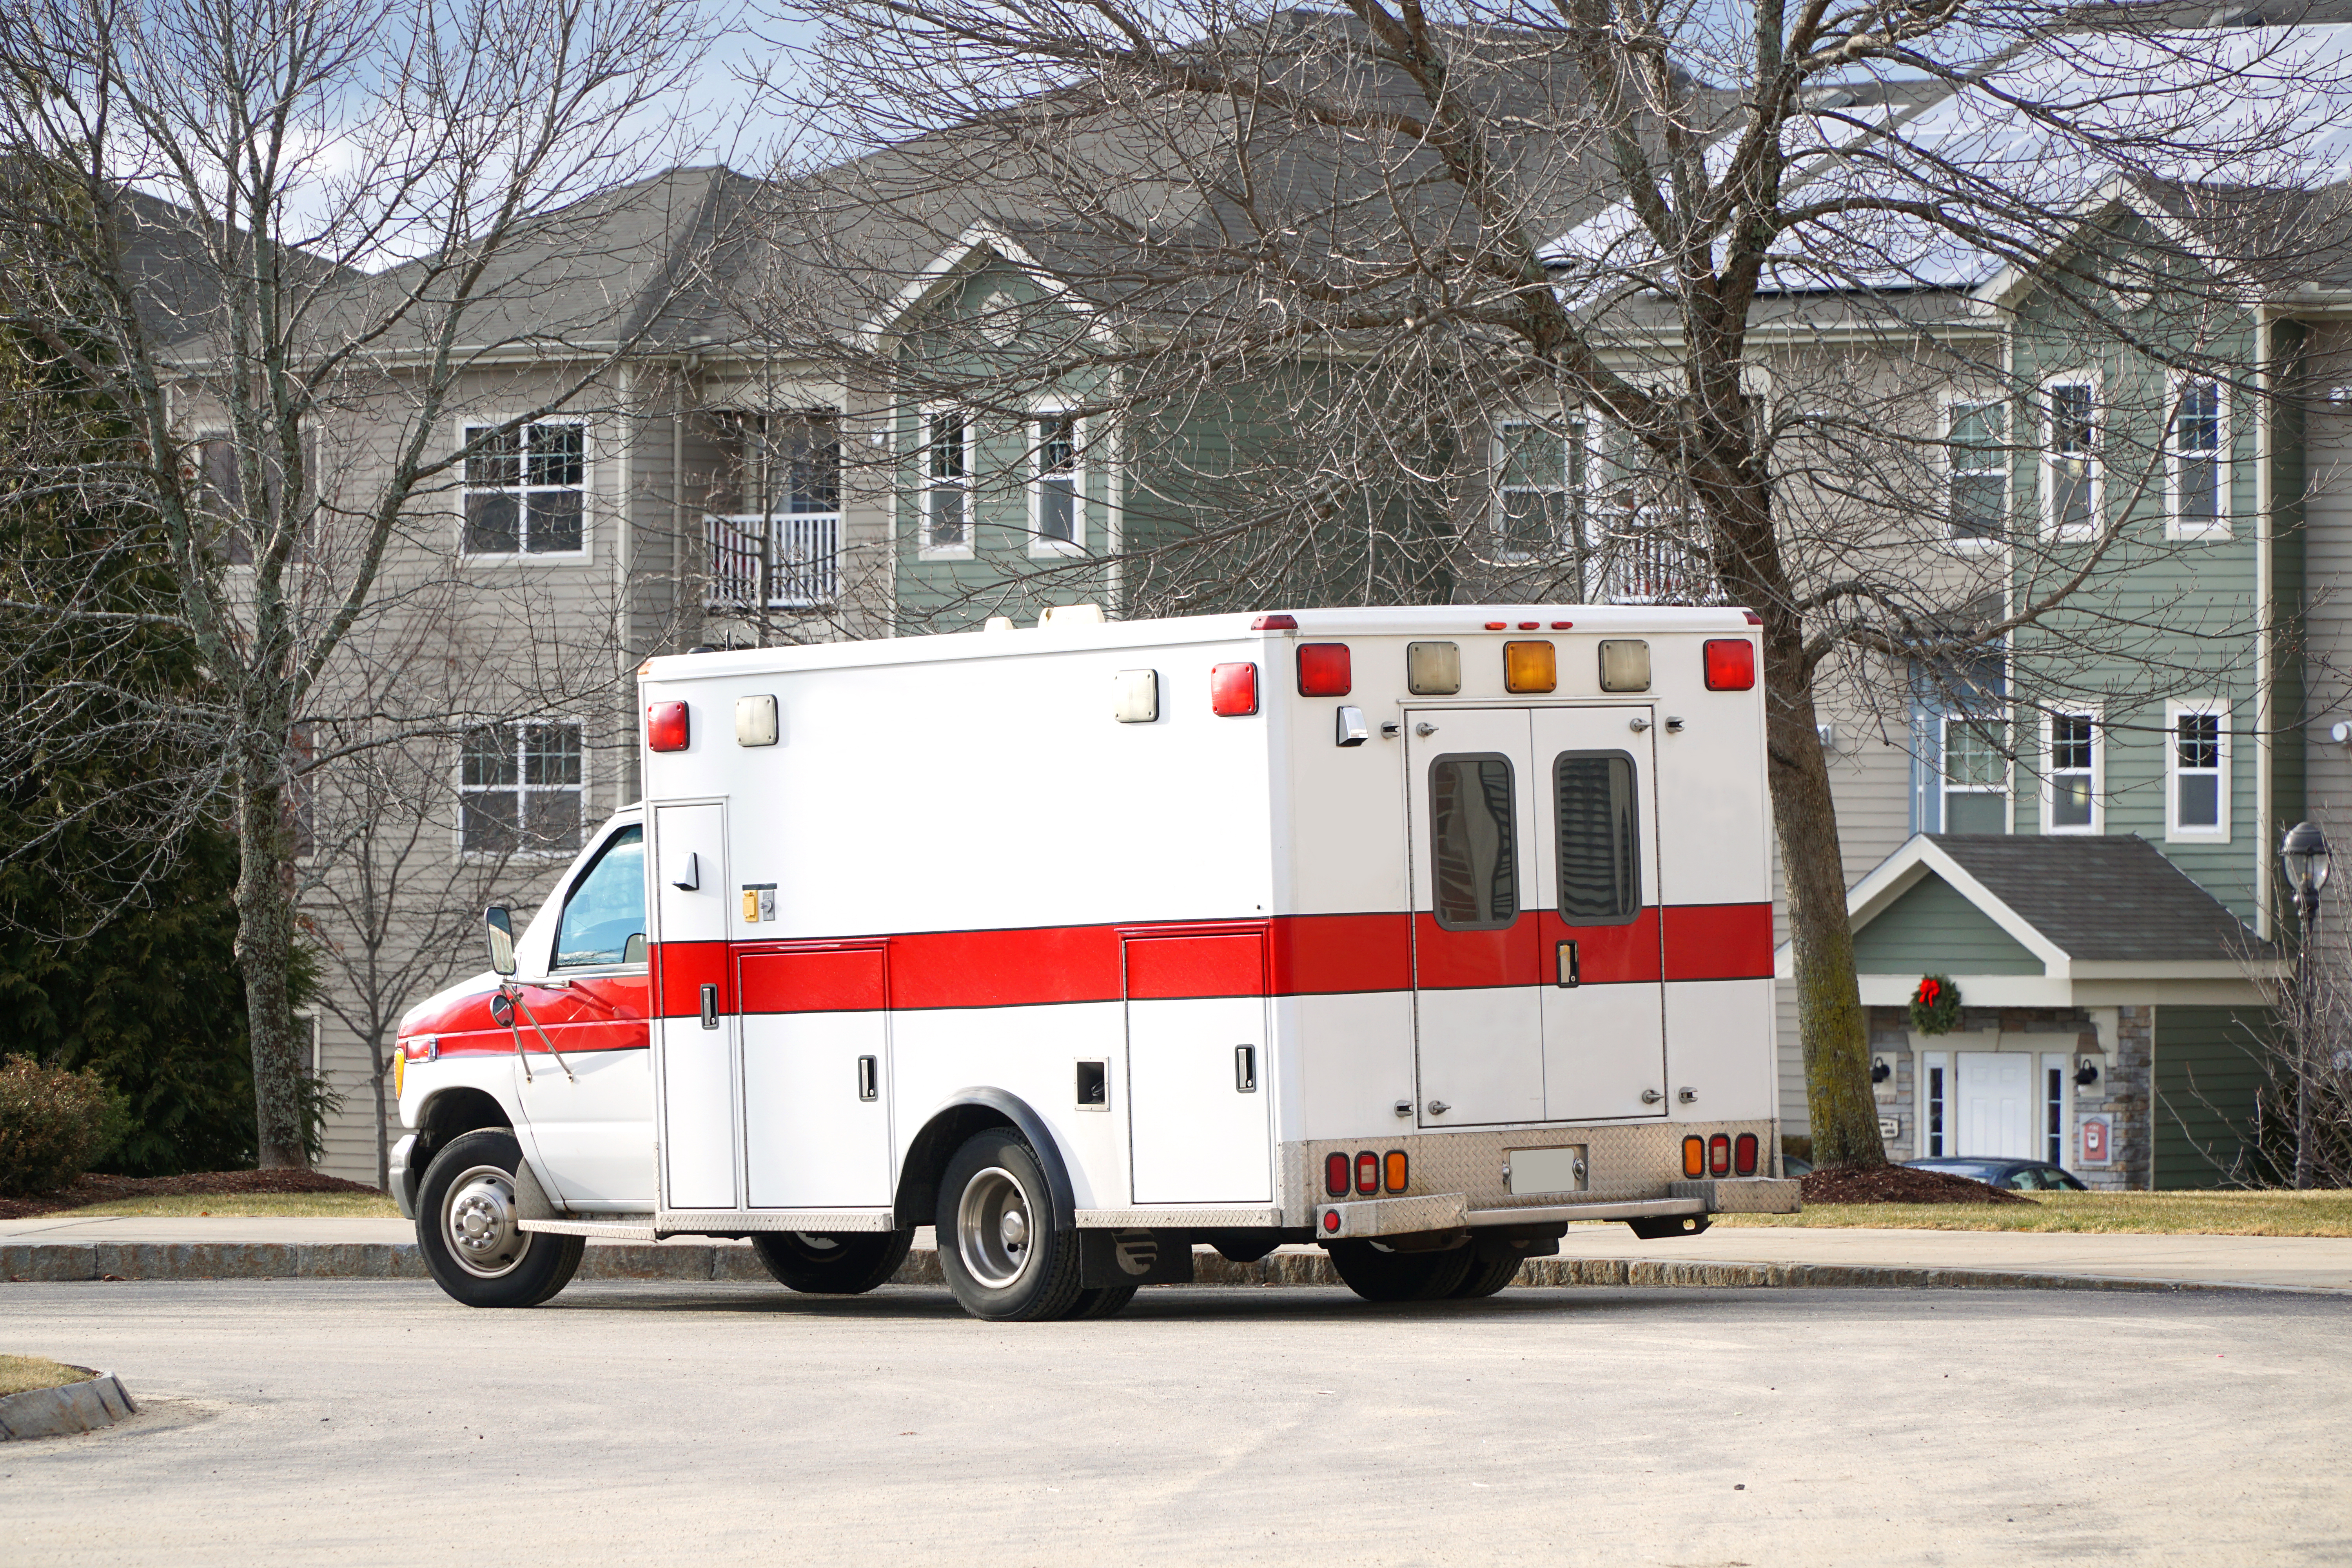 An ambulance parked near a house | Source: Shutterstock